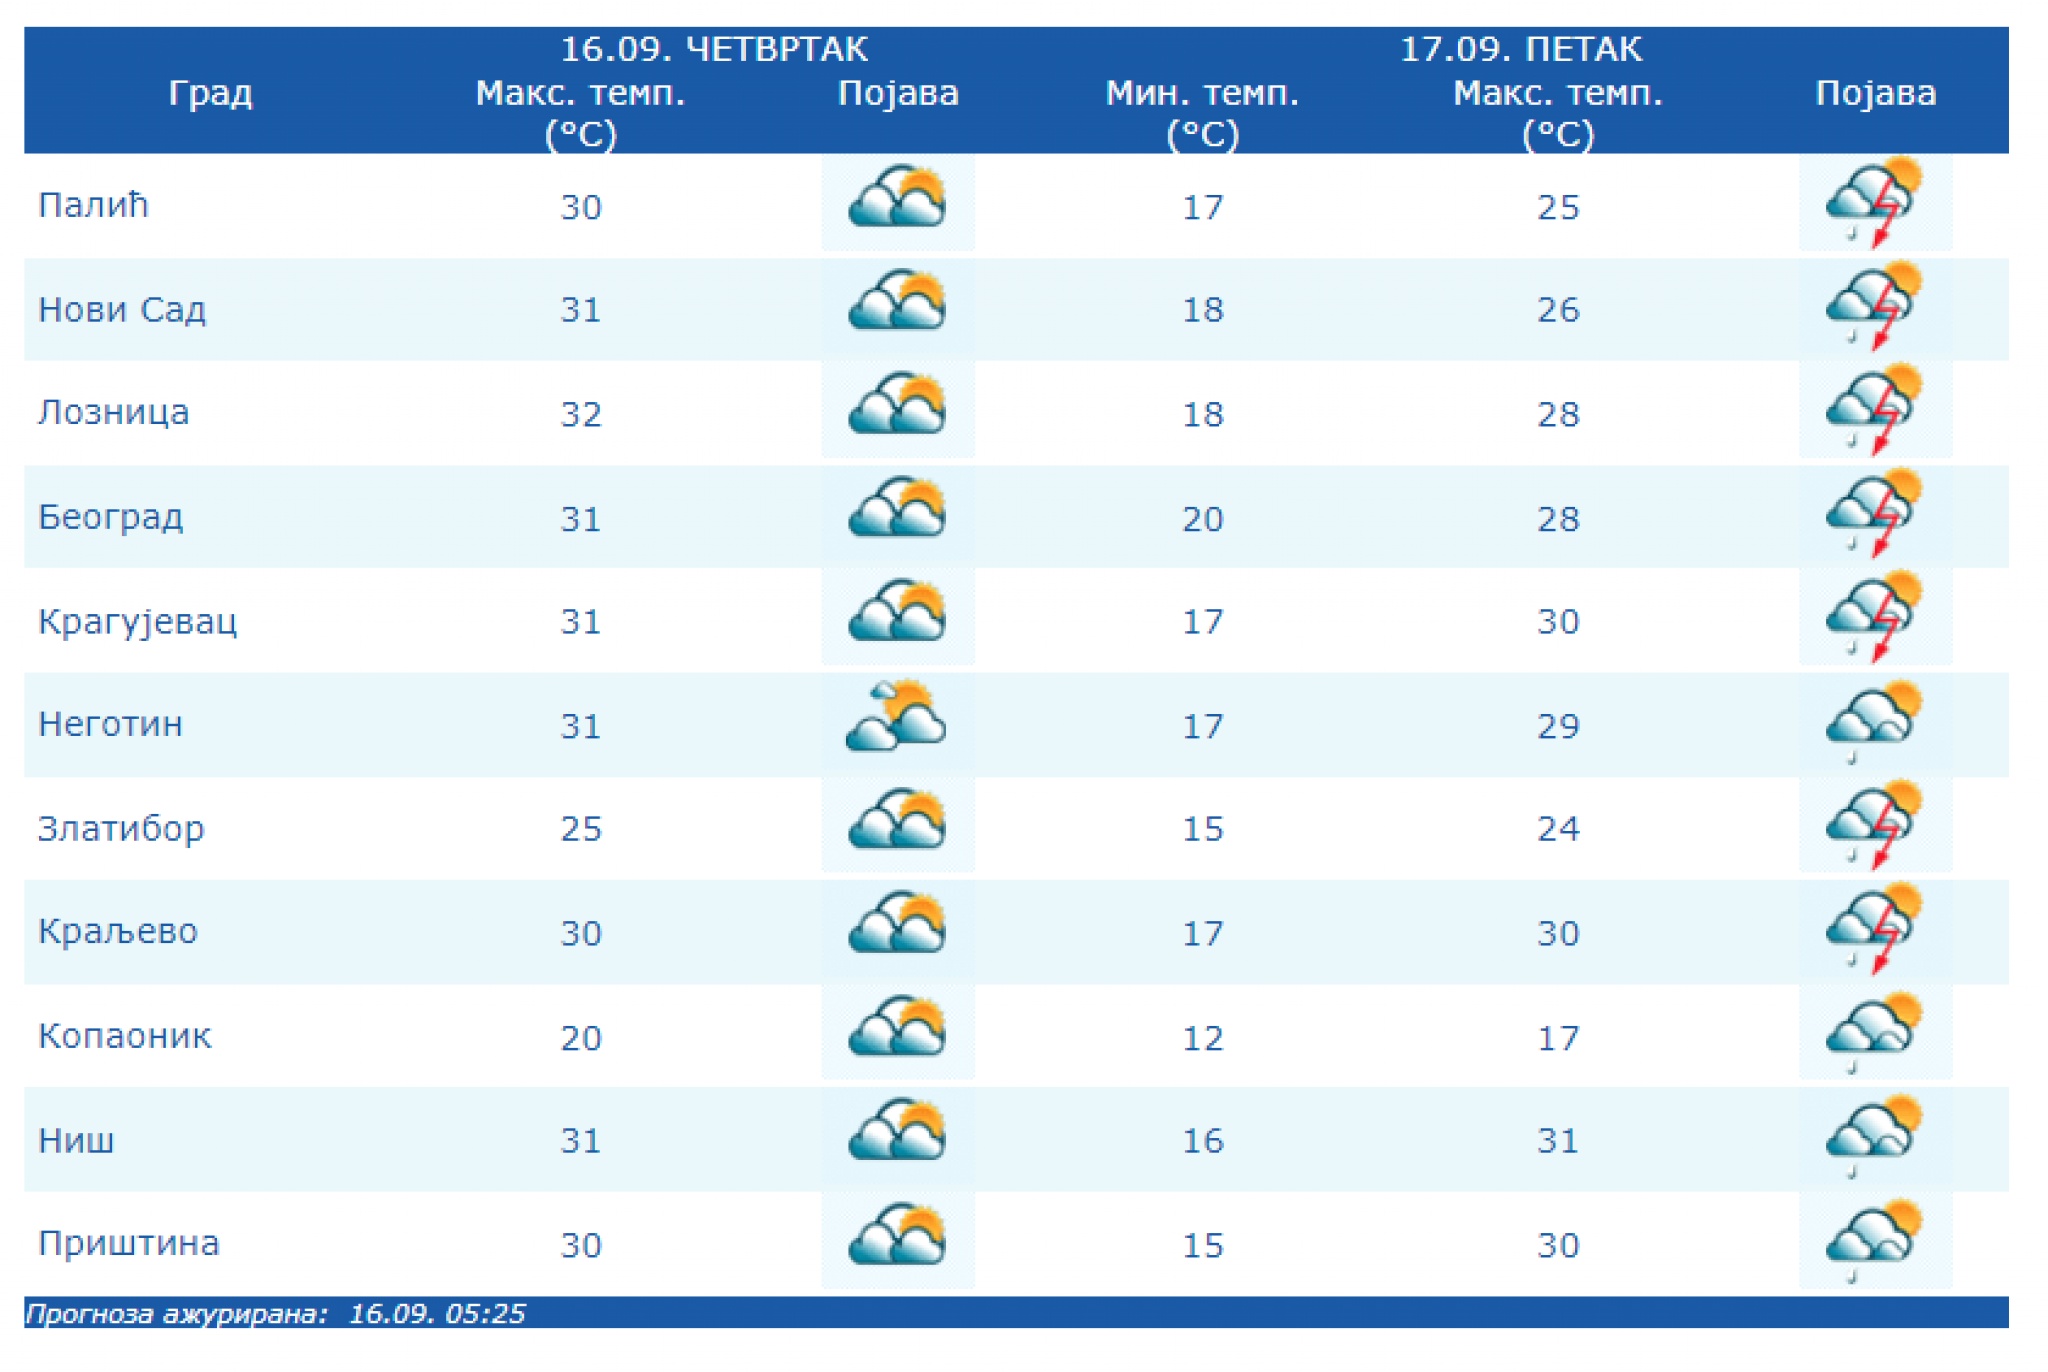 OBLAČNO JUTRO, TEMPERATURA LETNJA U tri dela Srbije stižu padavine, sutra preokret vremena